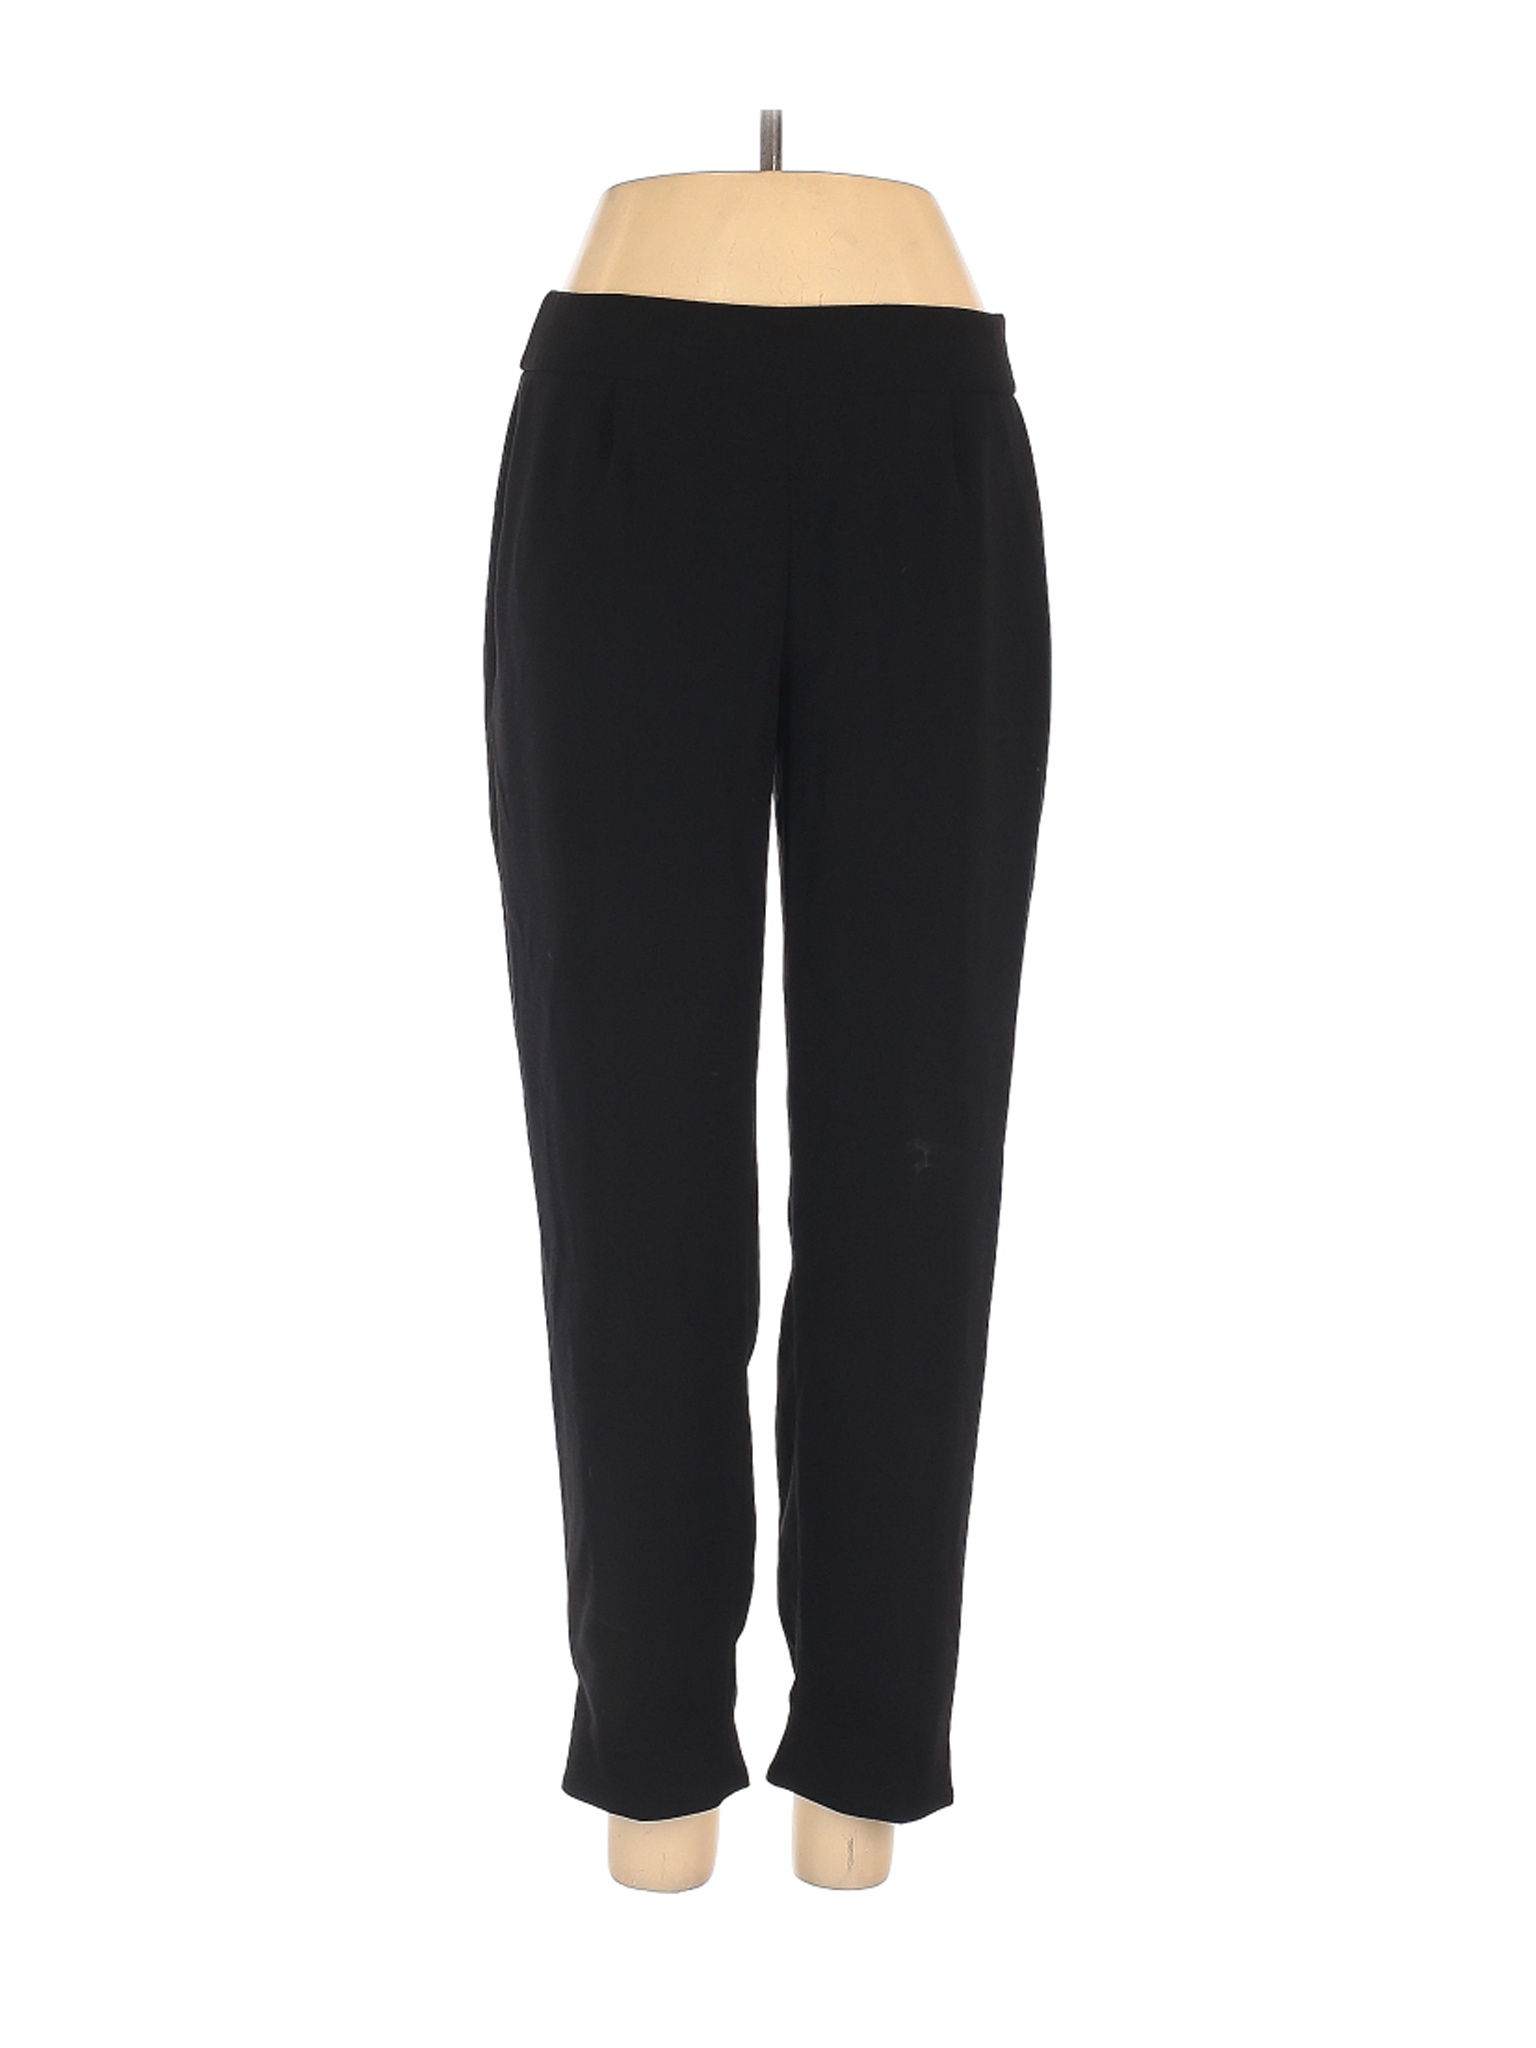 J.Crew Women Black Casual Pants 2 | eBay